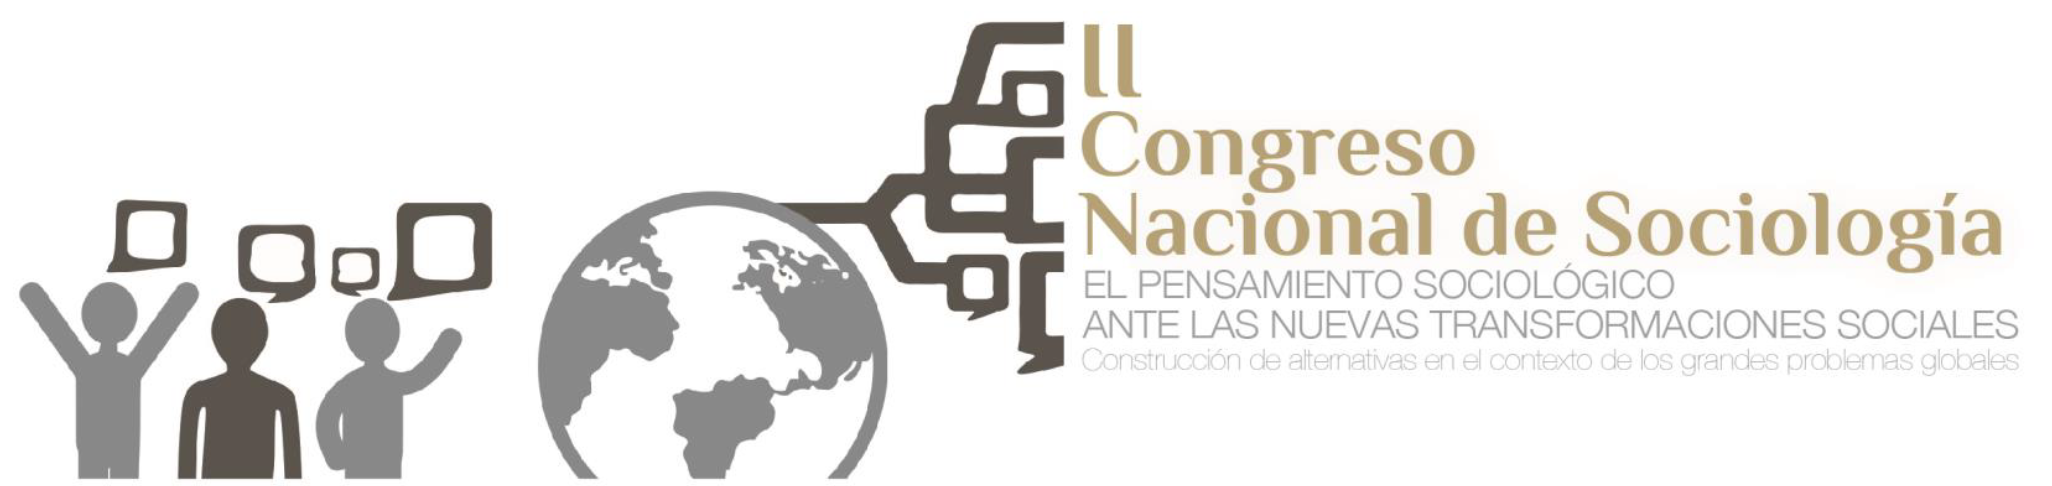 Congreso Sociologia UAMEX 2015